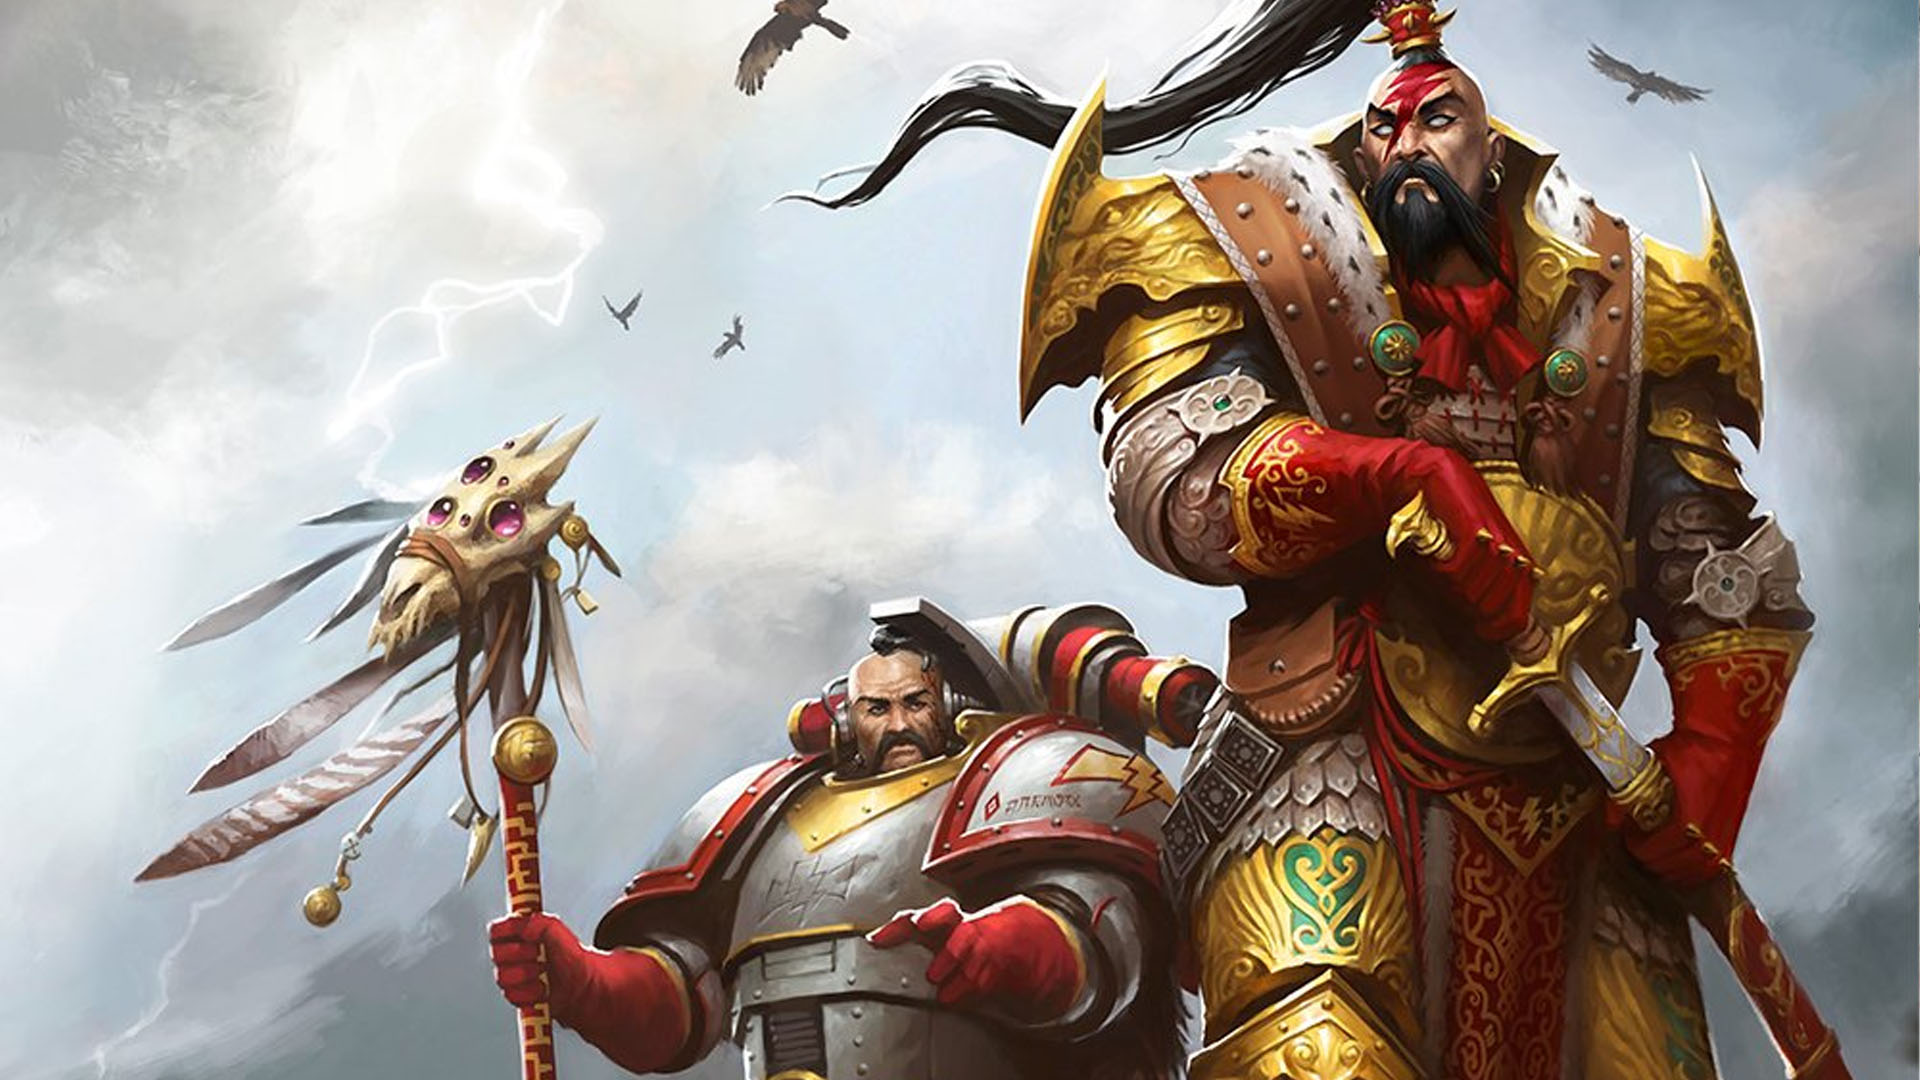 Warhammer 40k Jaghatai Khan guide - Warhammer Community image showing Jaghatai Khan among his warriors